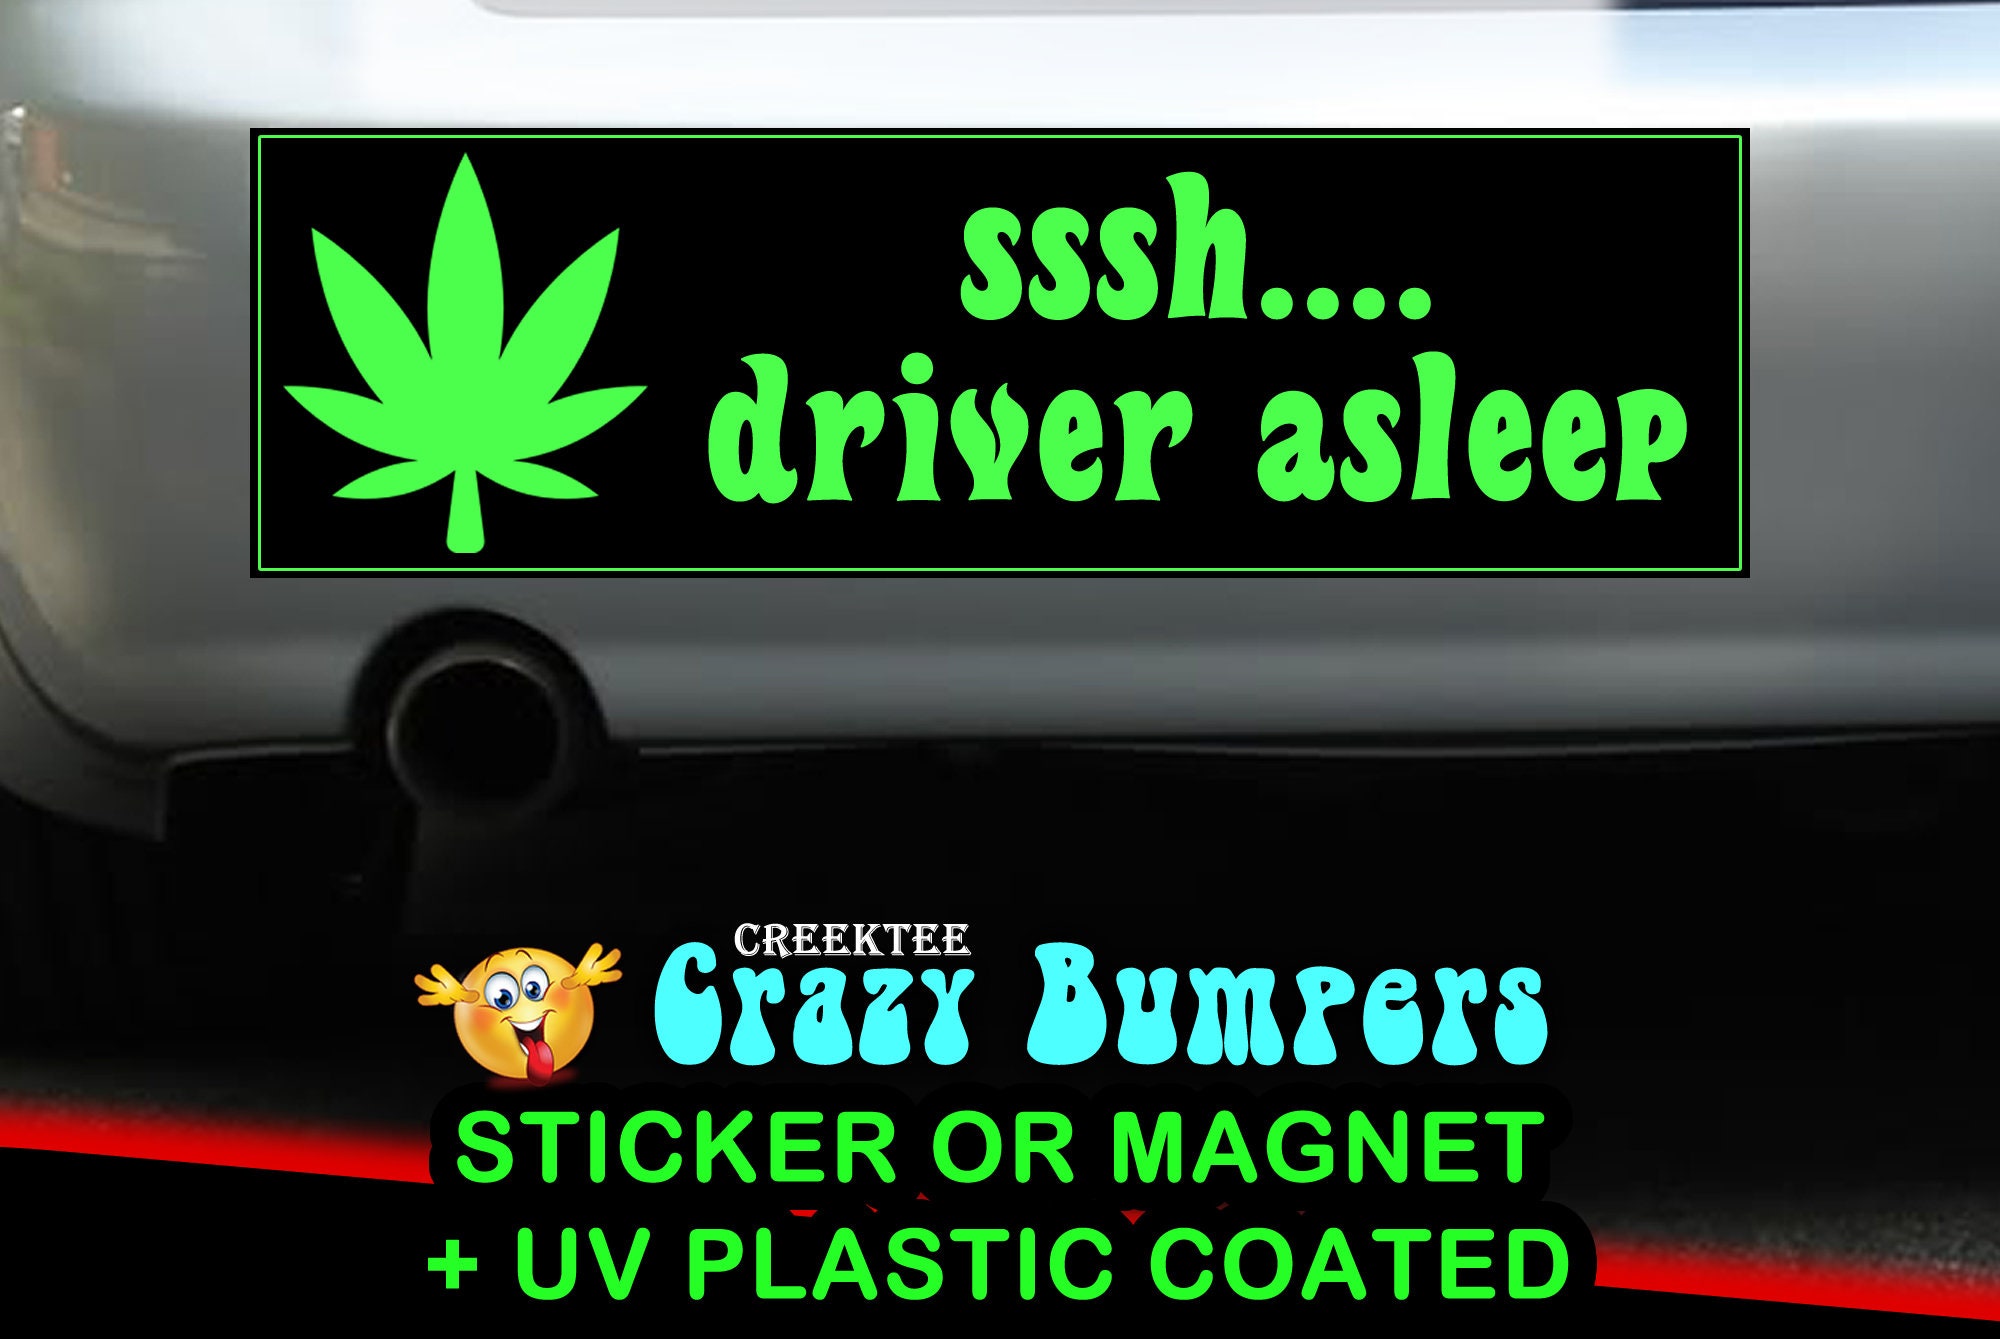 sssh driver asleep pot leaf Adult 10 x 3 Bumper Sticker or Magnetic Bumper Sticker Available